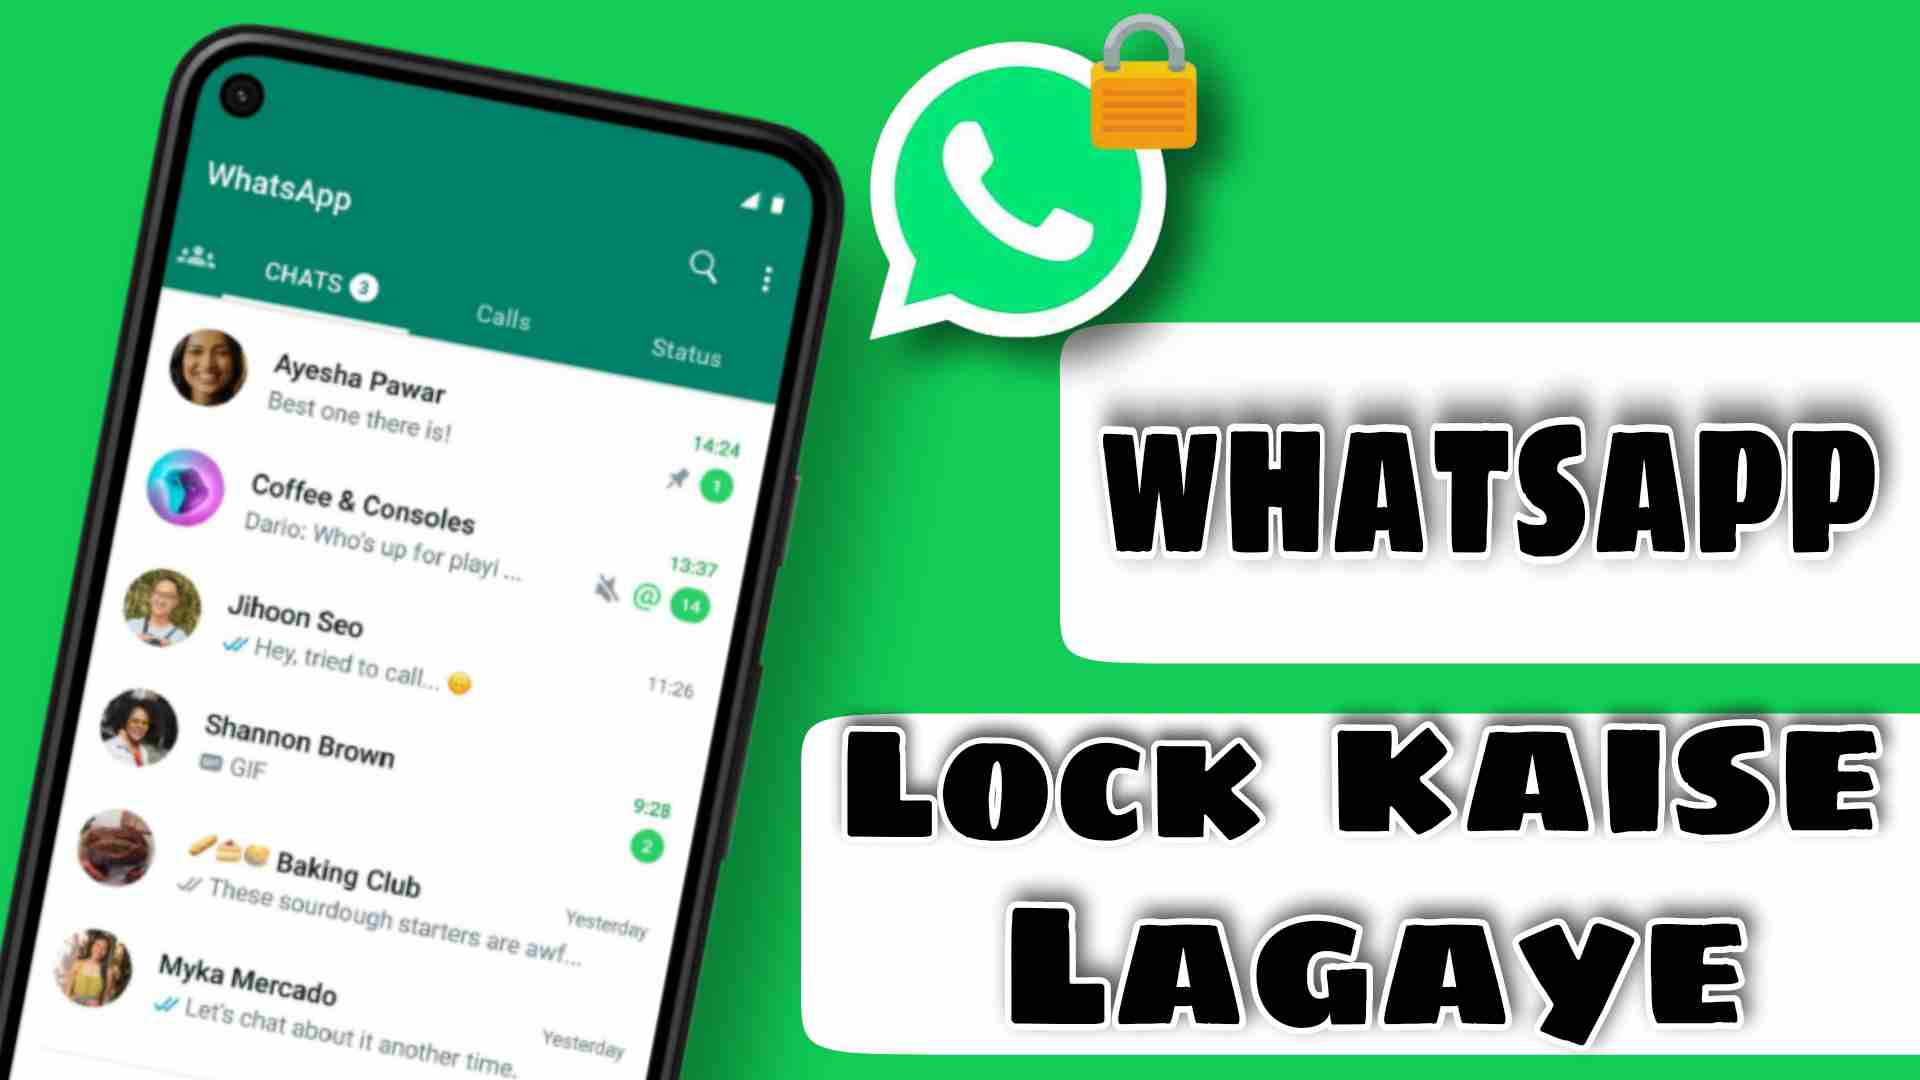 whatsapp par lock kaise lagaye